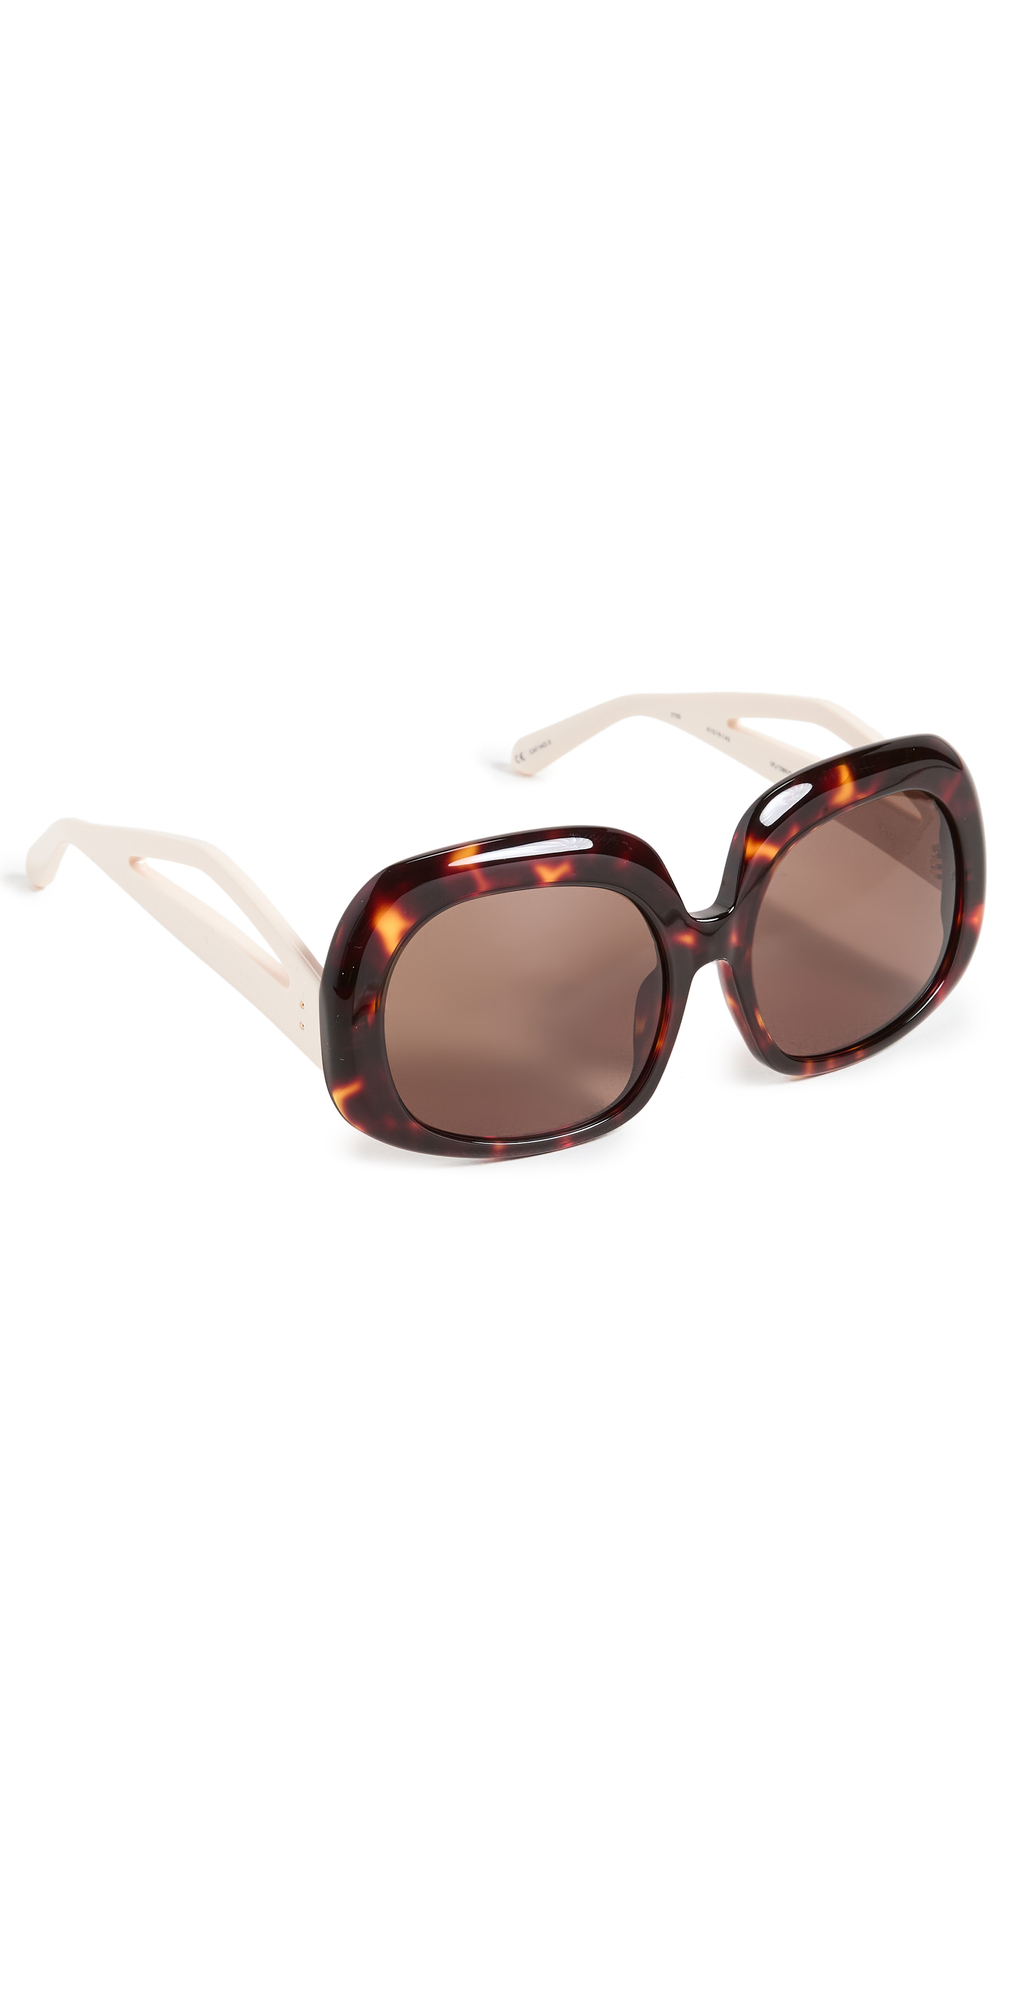 Linda Farrow Luxe Lea Sunglasses in brown / gold